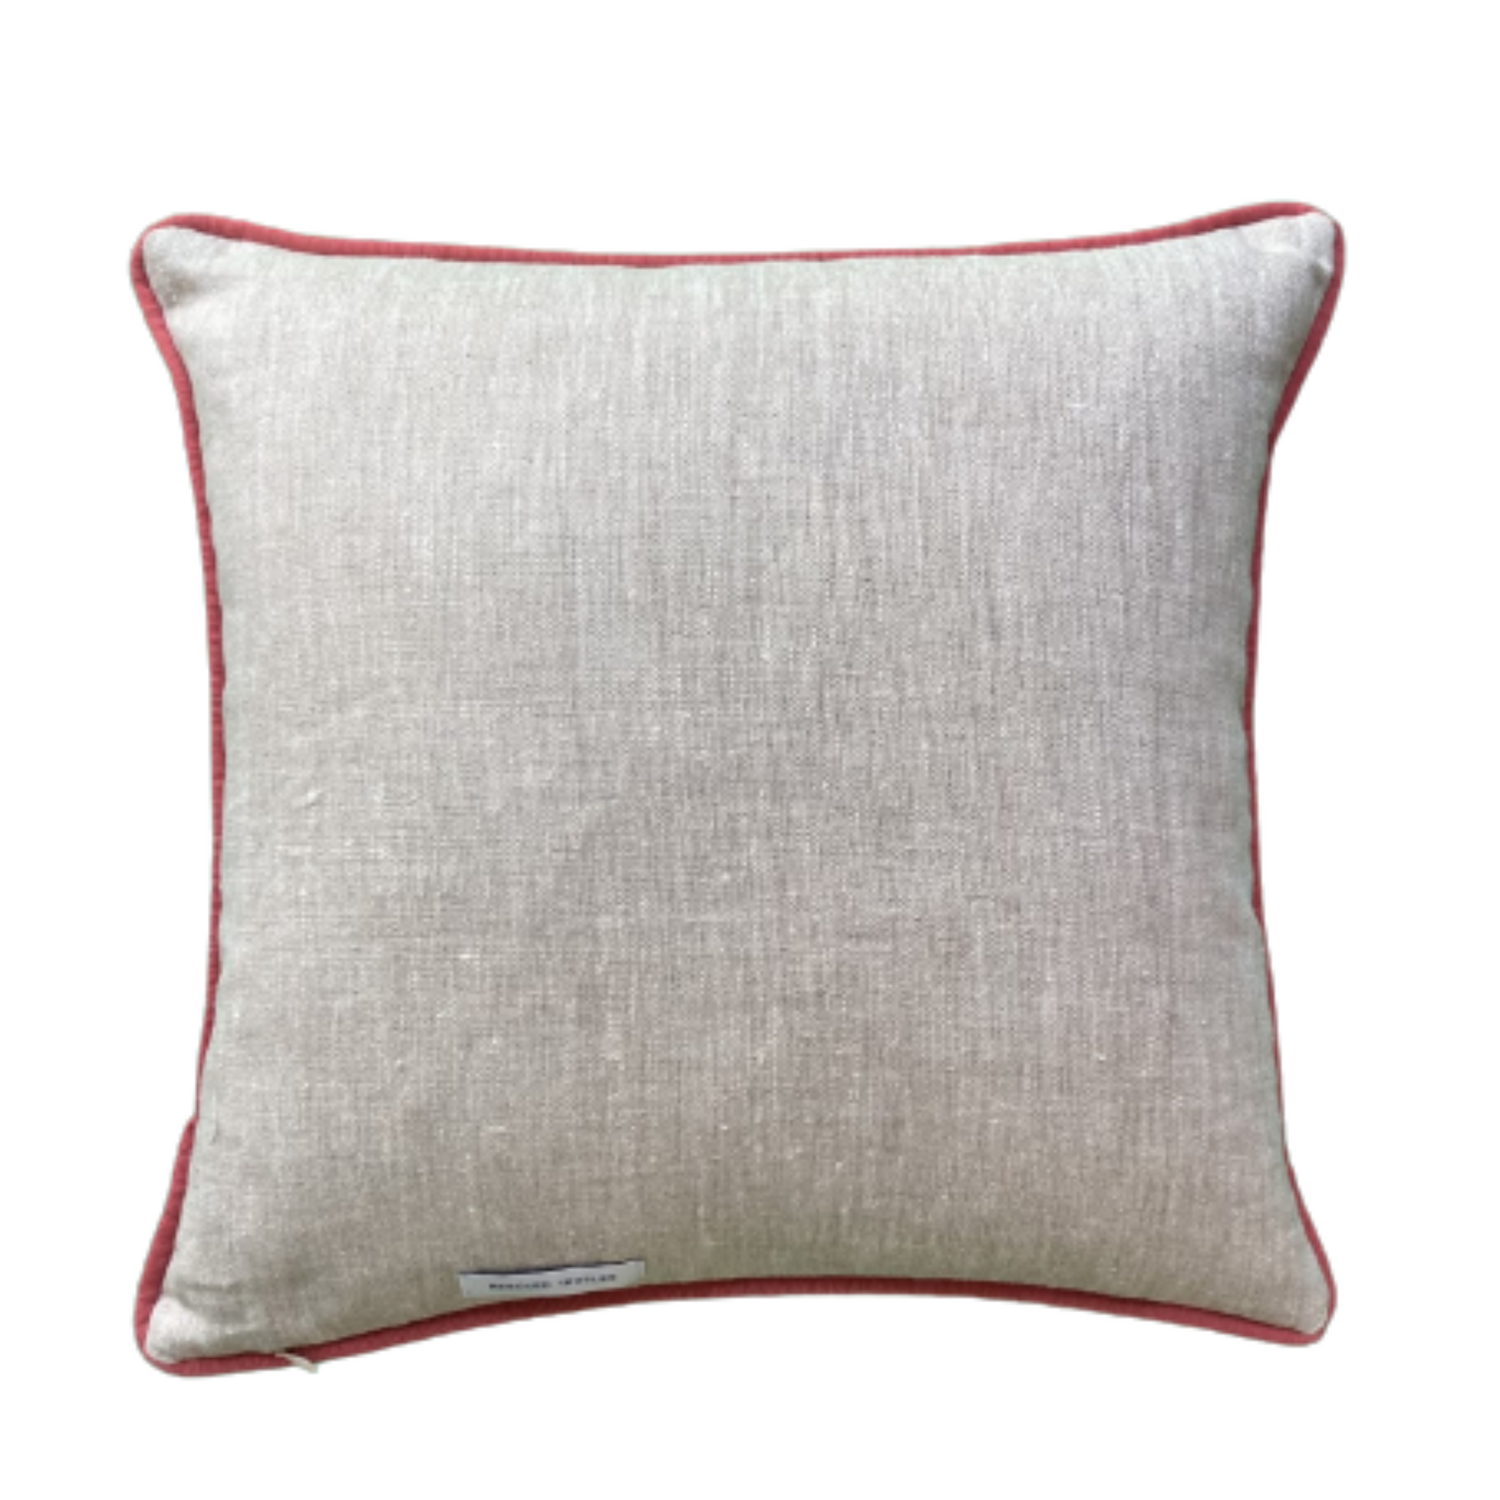 Manuel Canovas Elegant Cerise Toile 16 X 16 Square Designer Pillow with Down Feather Insert